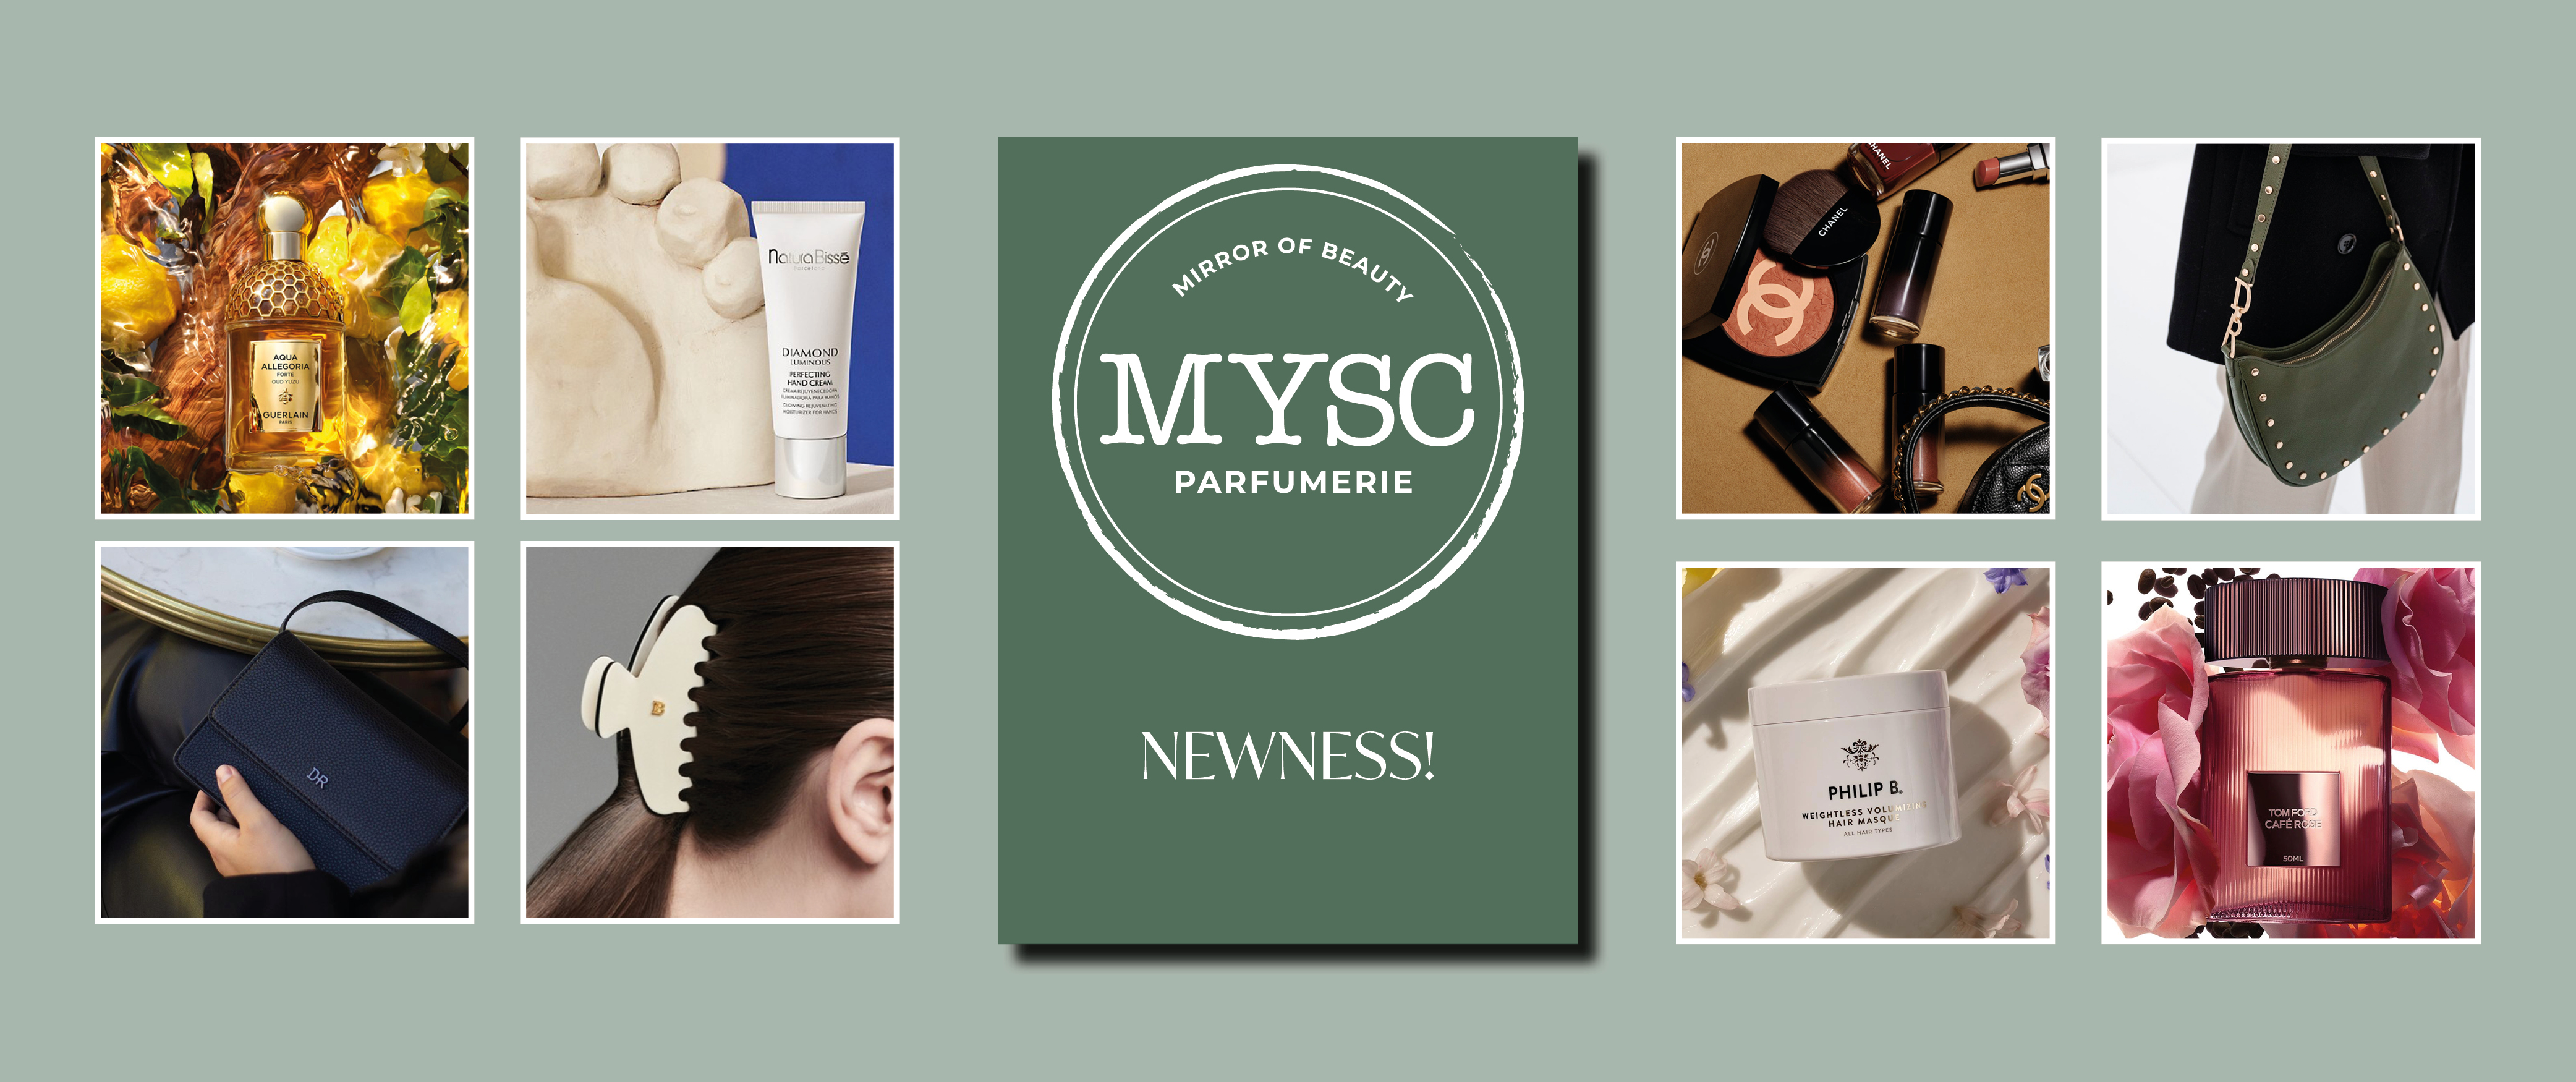 Newness by MYSC